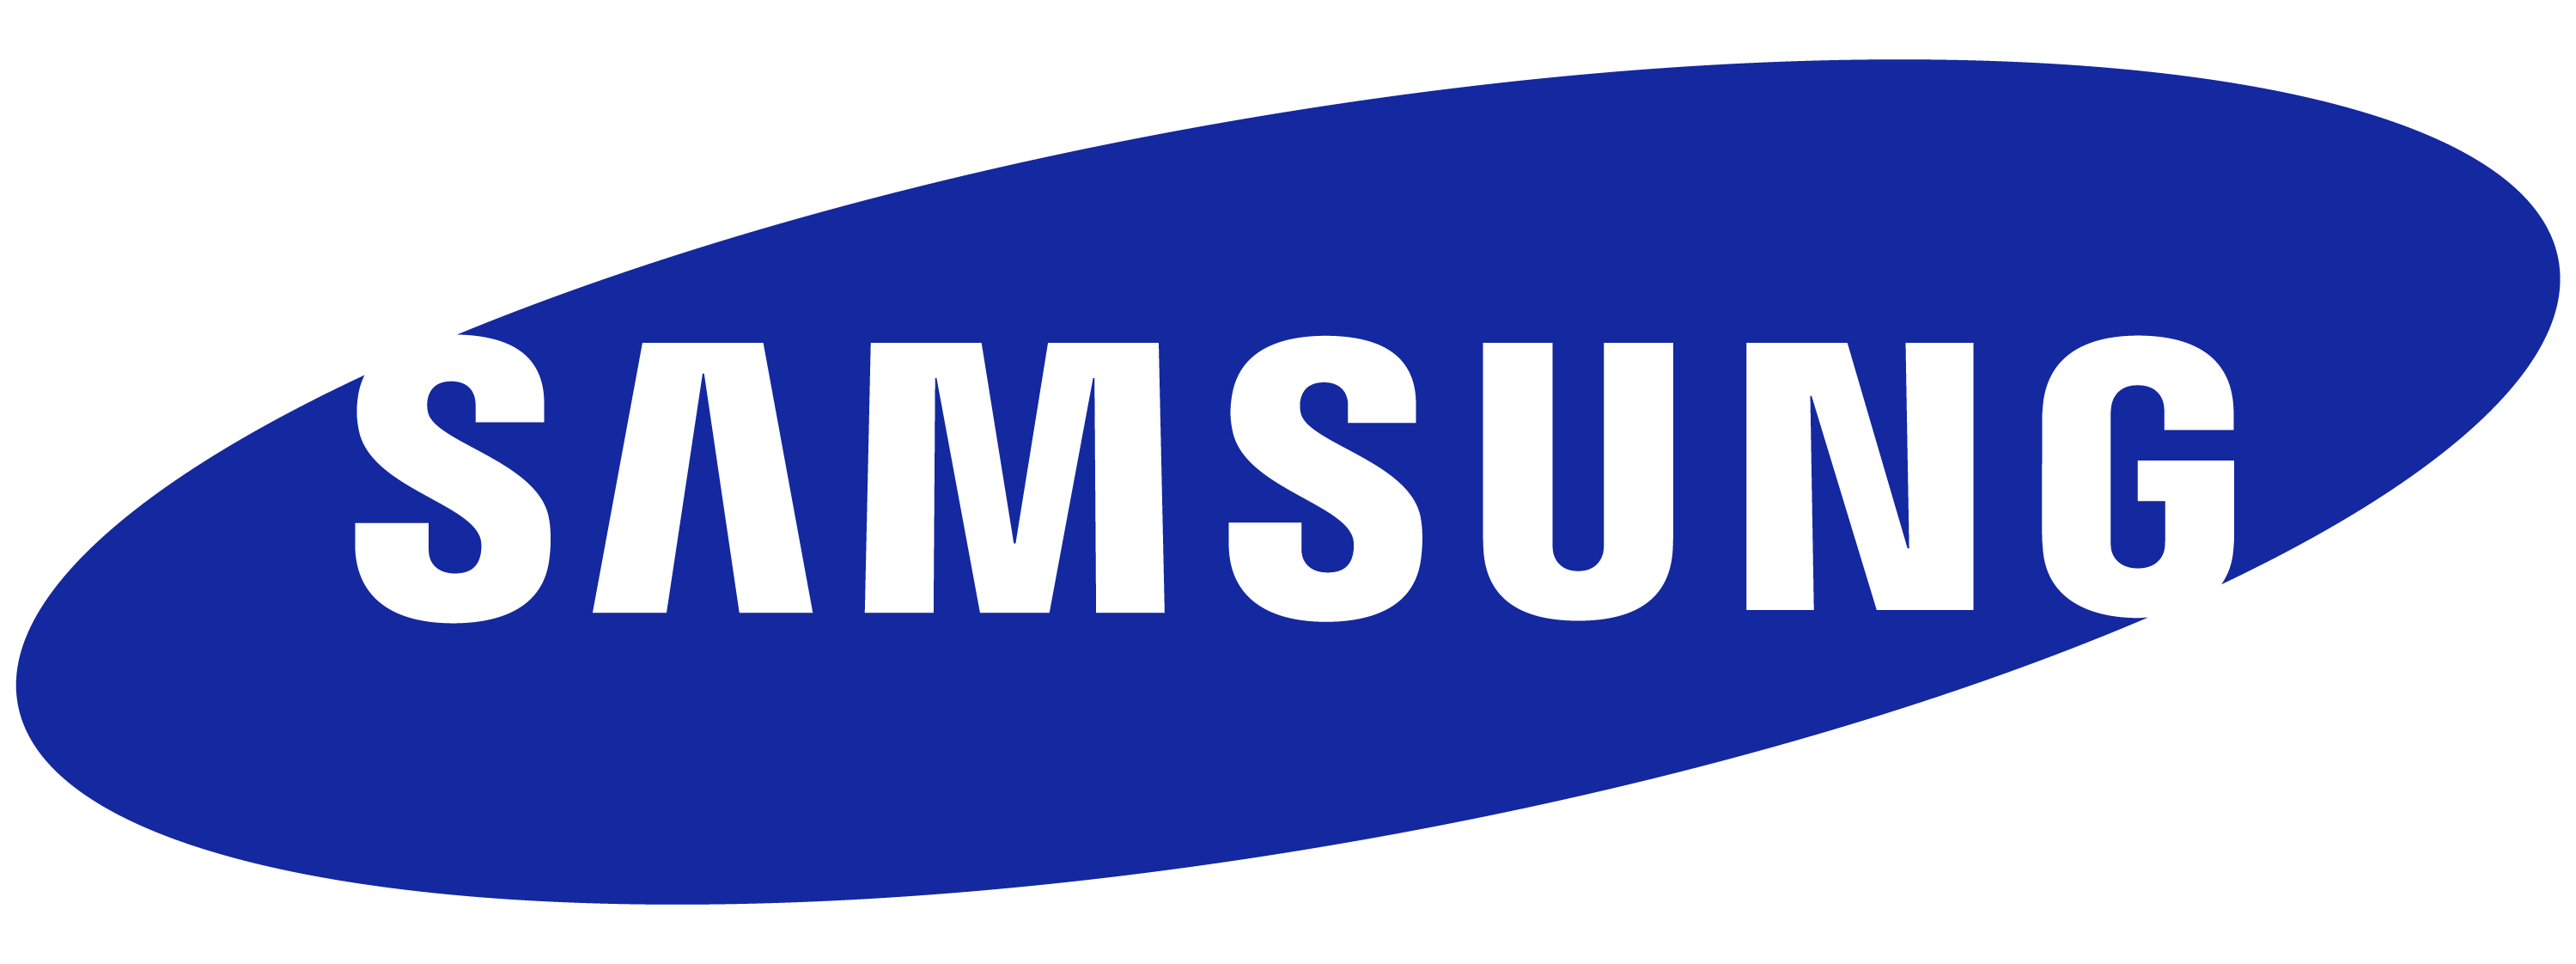 New Mobile Logo - Samsung brings 14nm FinFET mobile application processor